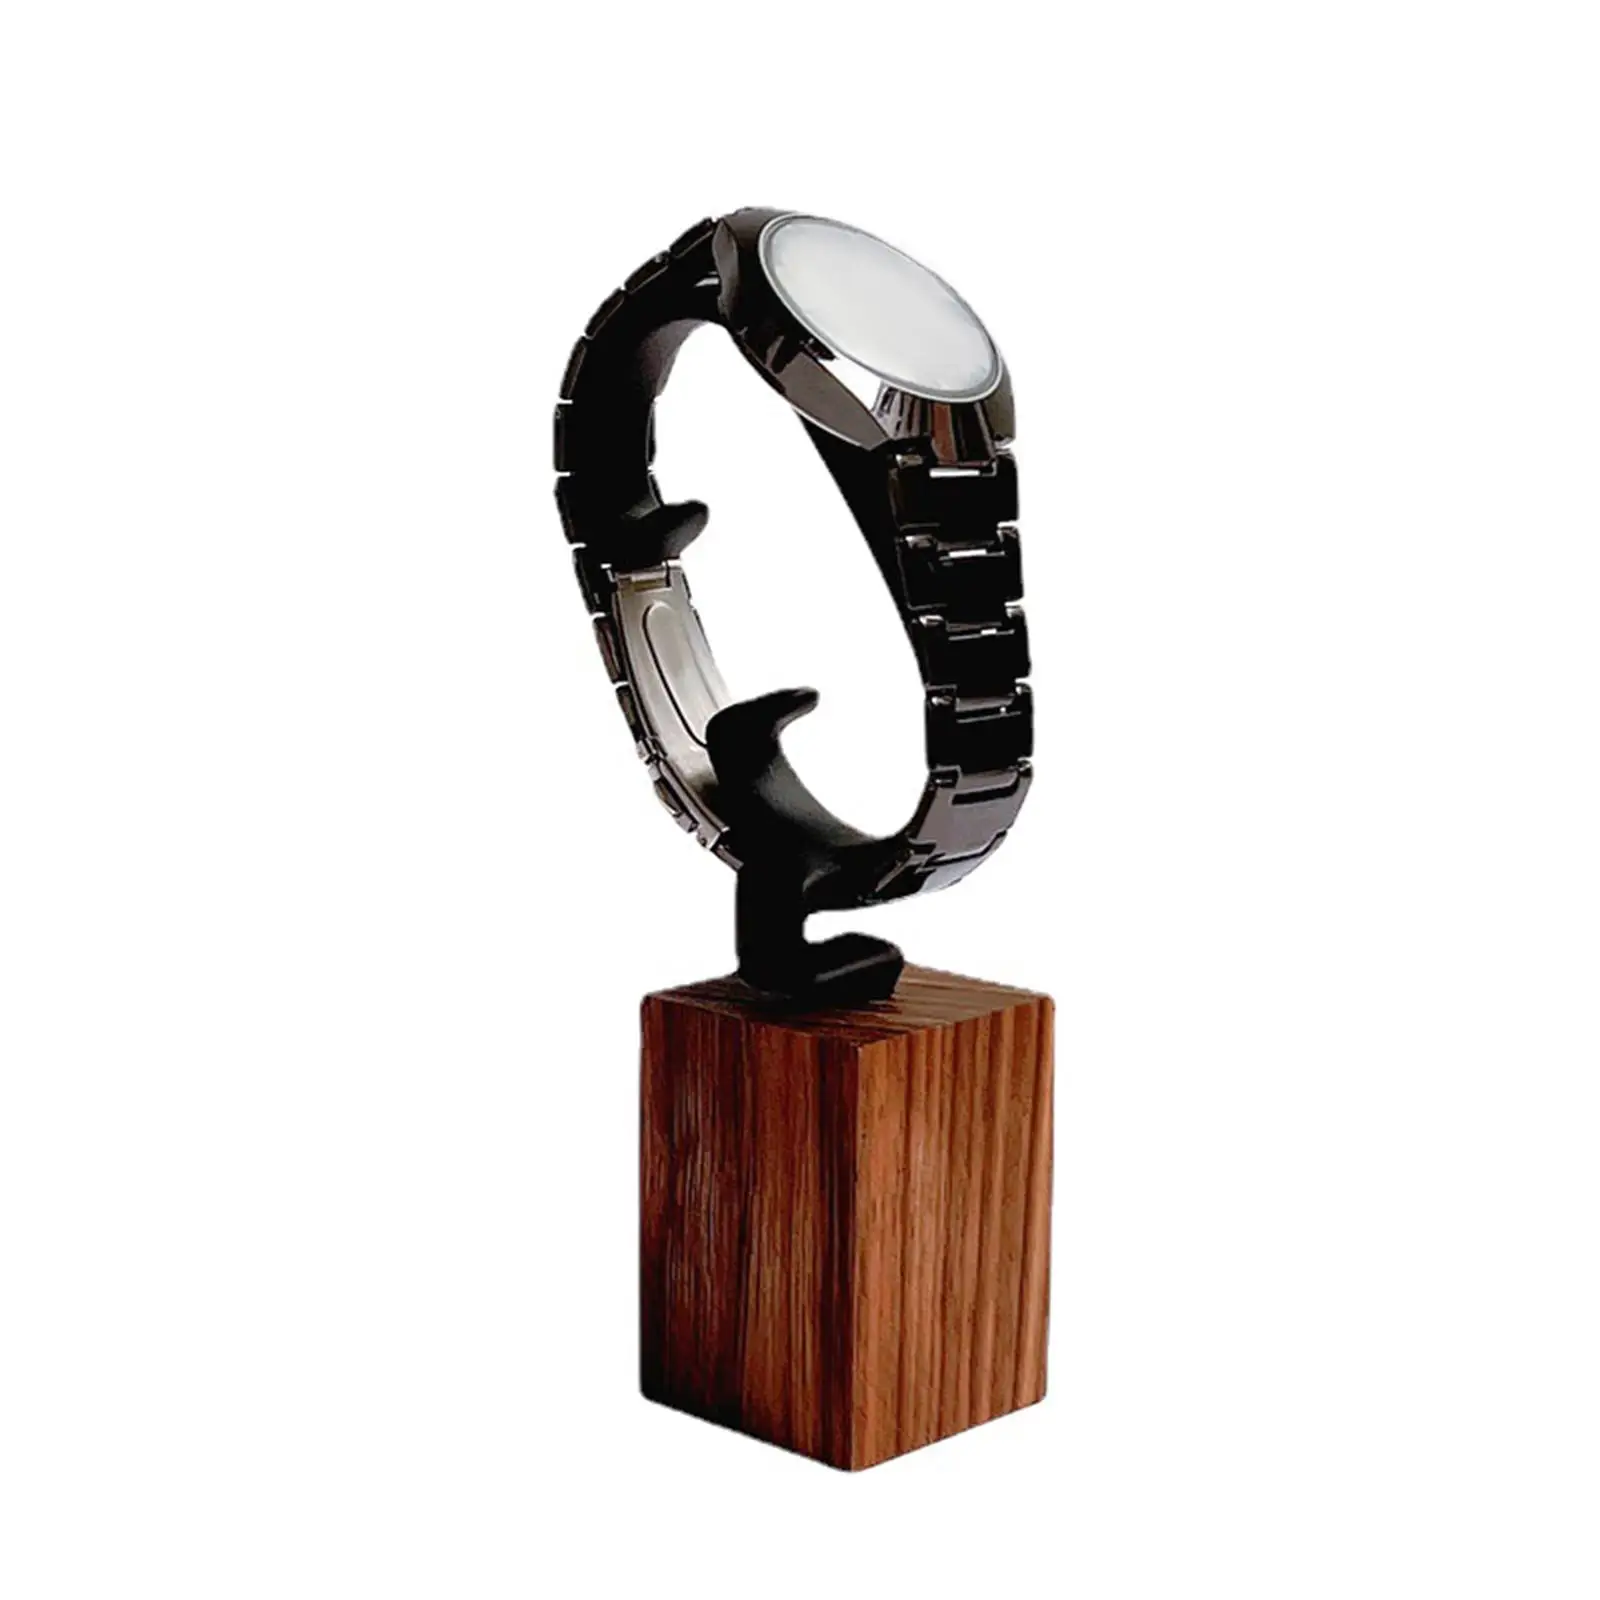 Watch Display Stand Storage Holder Bracelet Watch Display Rack for Travel Living Room Decoration